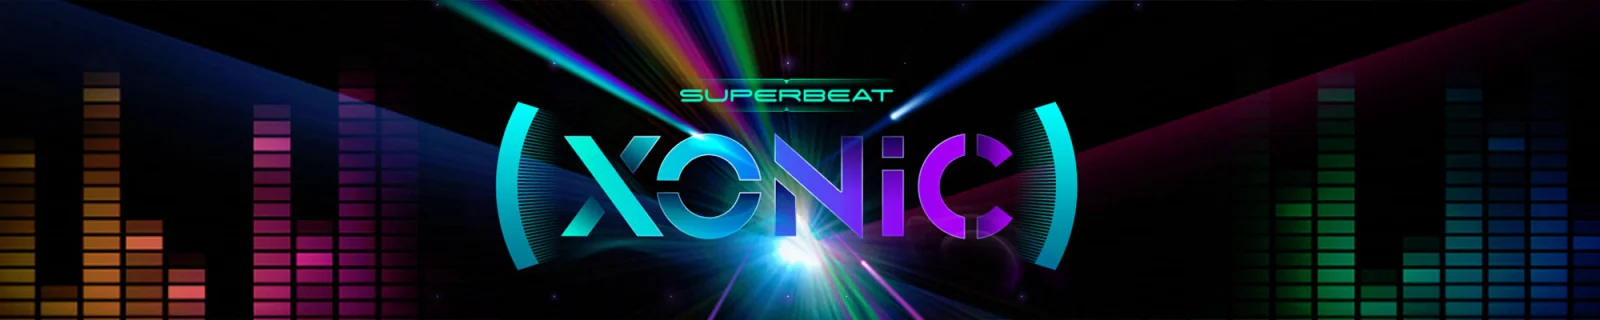 《DJMAX》原班打造《Superbeat: Xonic》